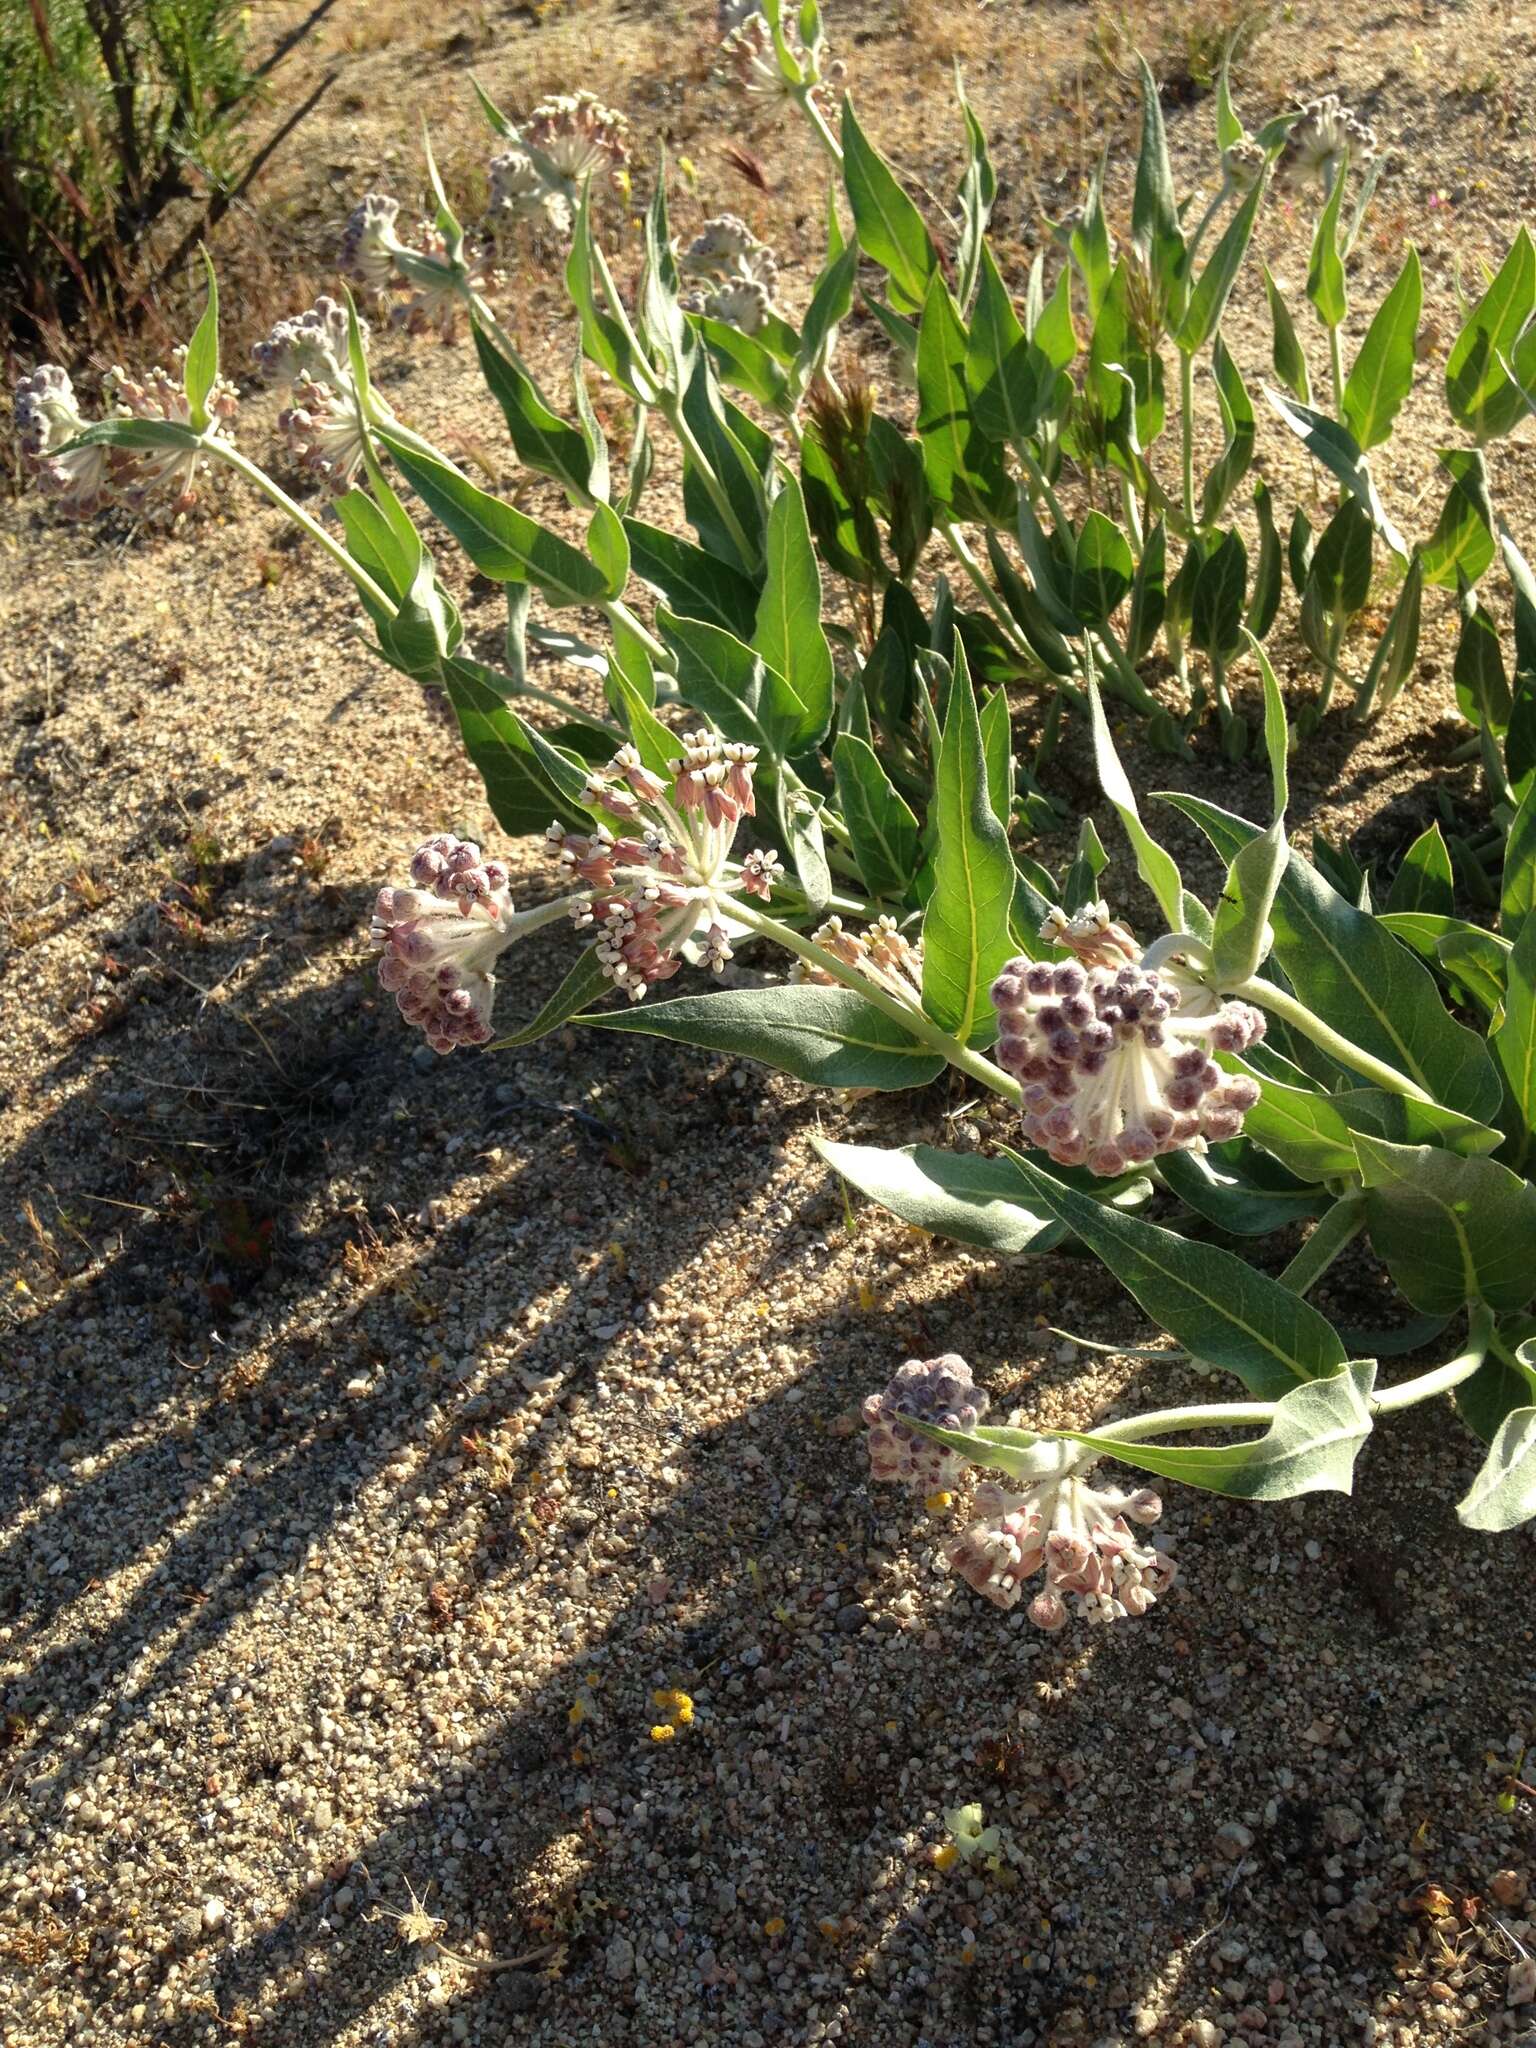 Image of Parish's woolly milkweed